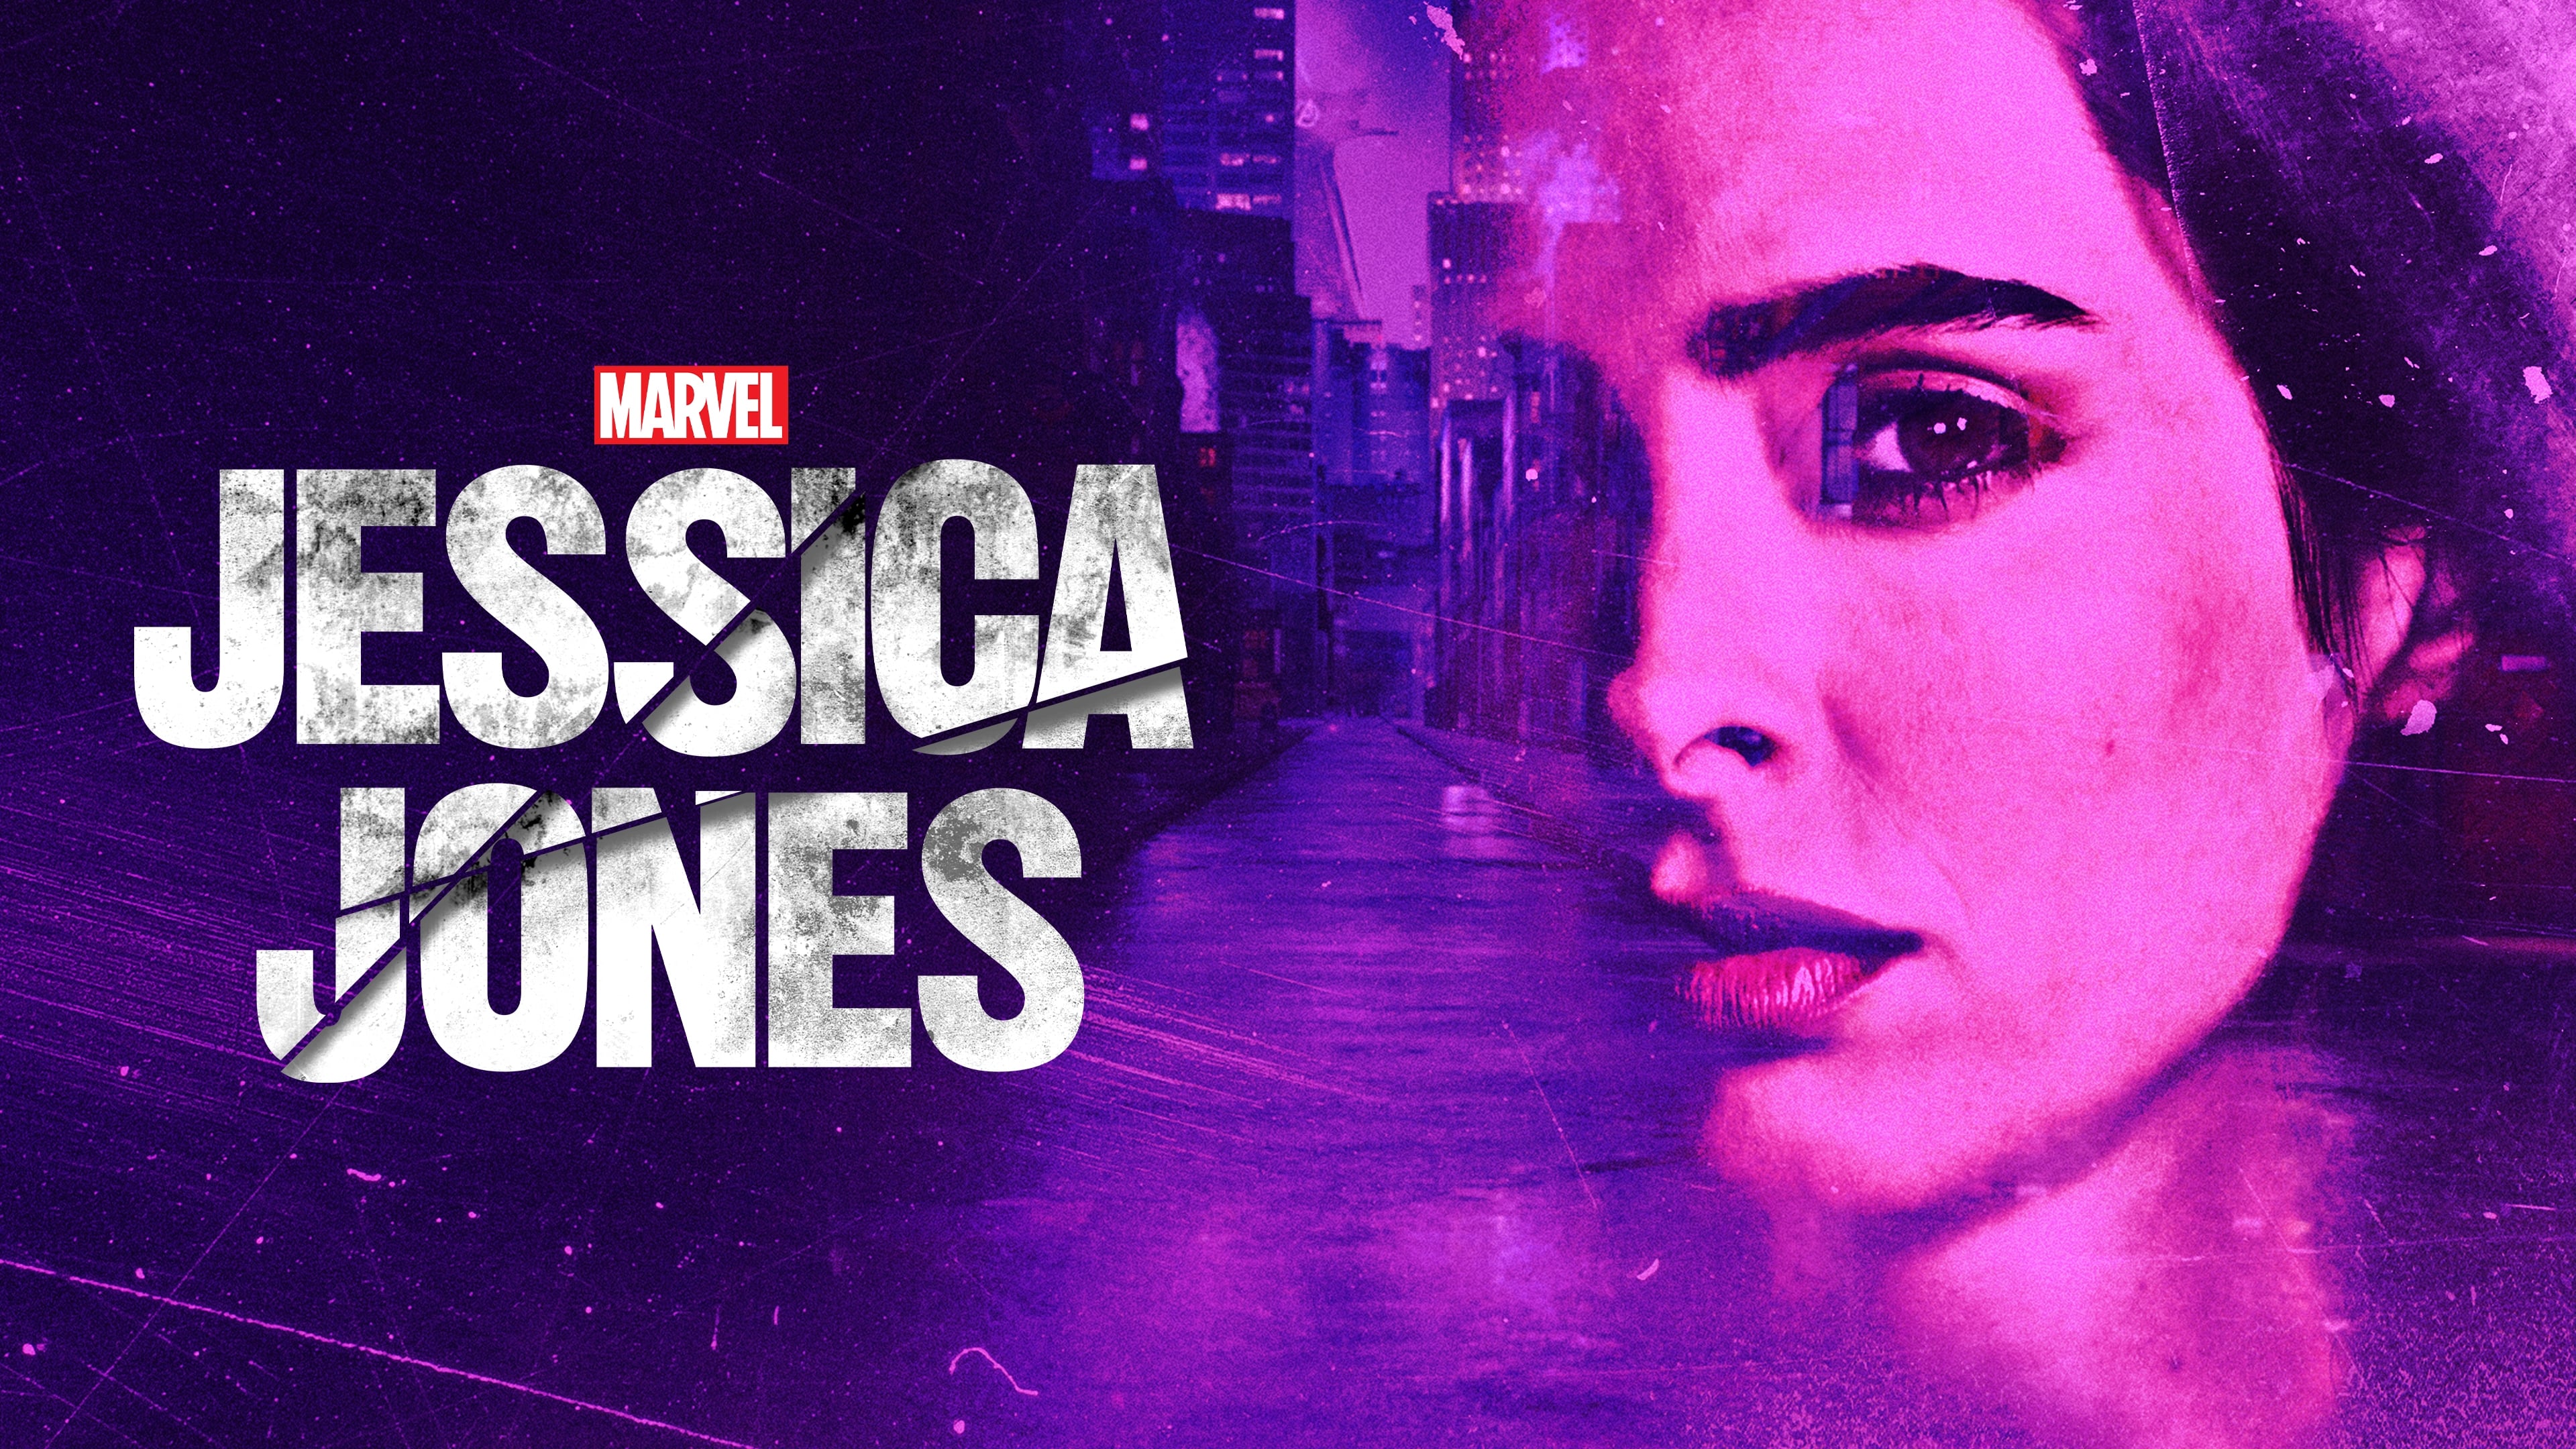 Marvel - Jessica Jones - Season 1